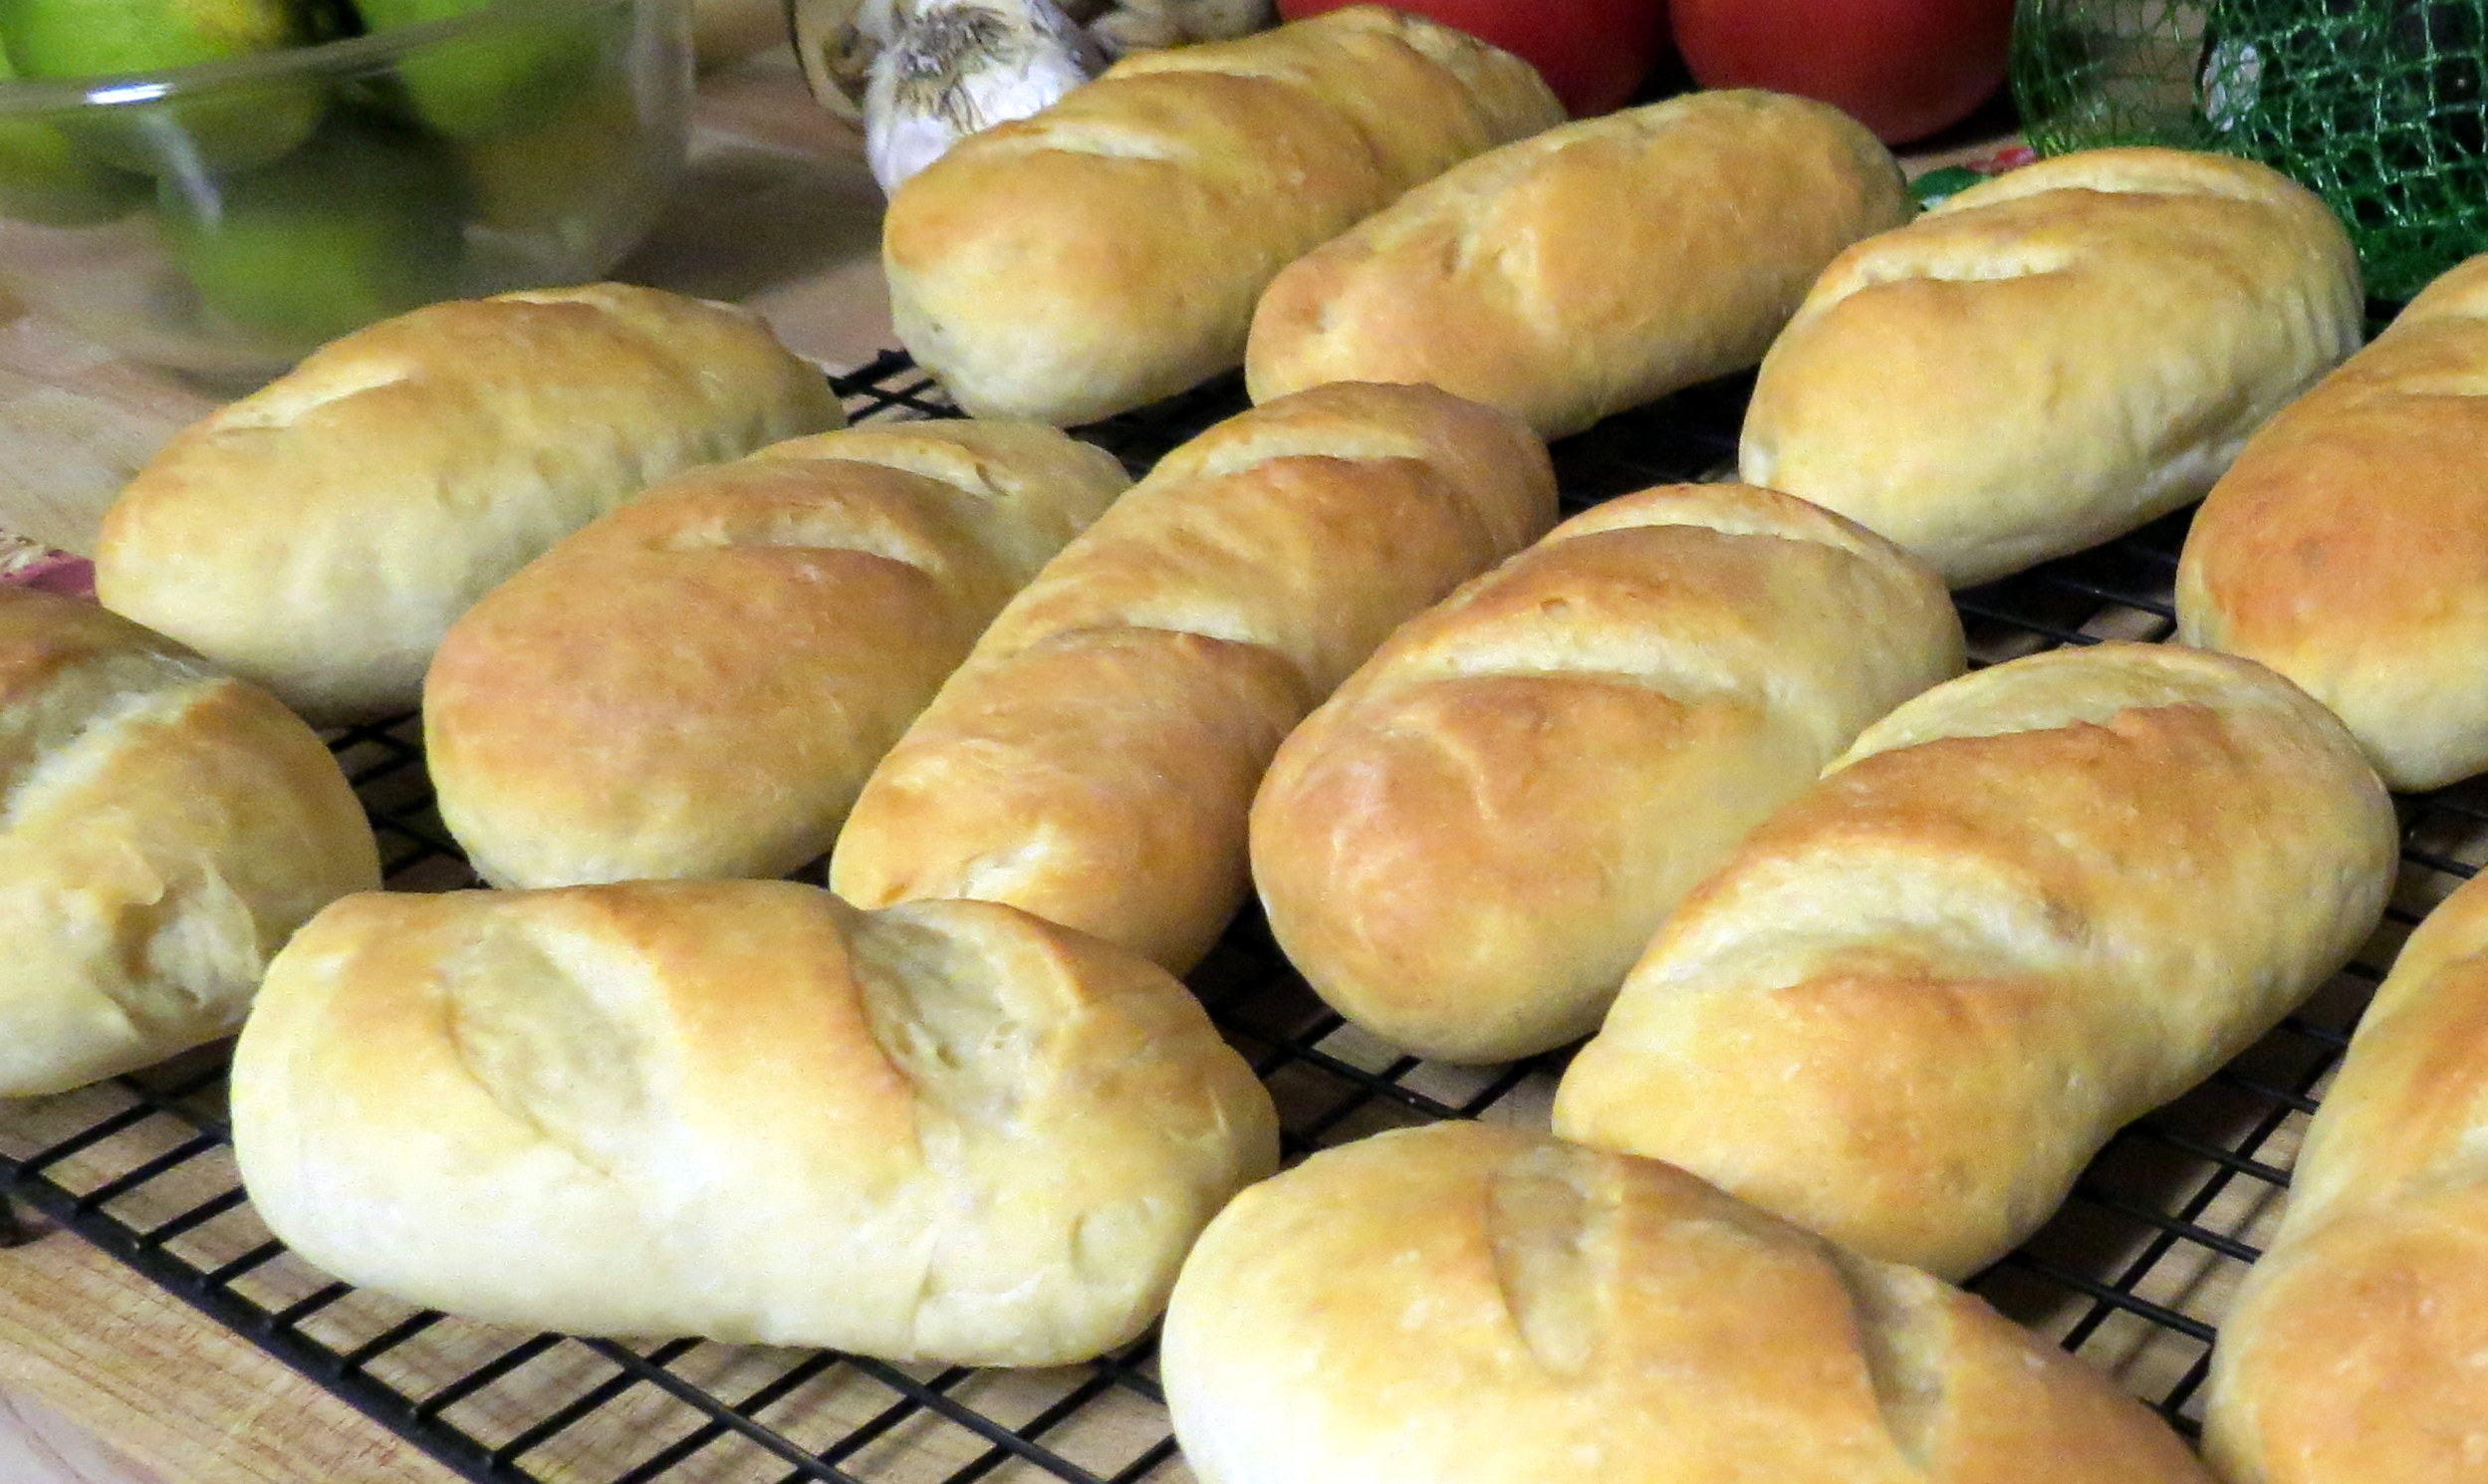 types of crusty bread